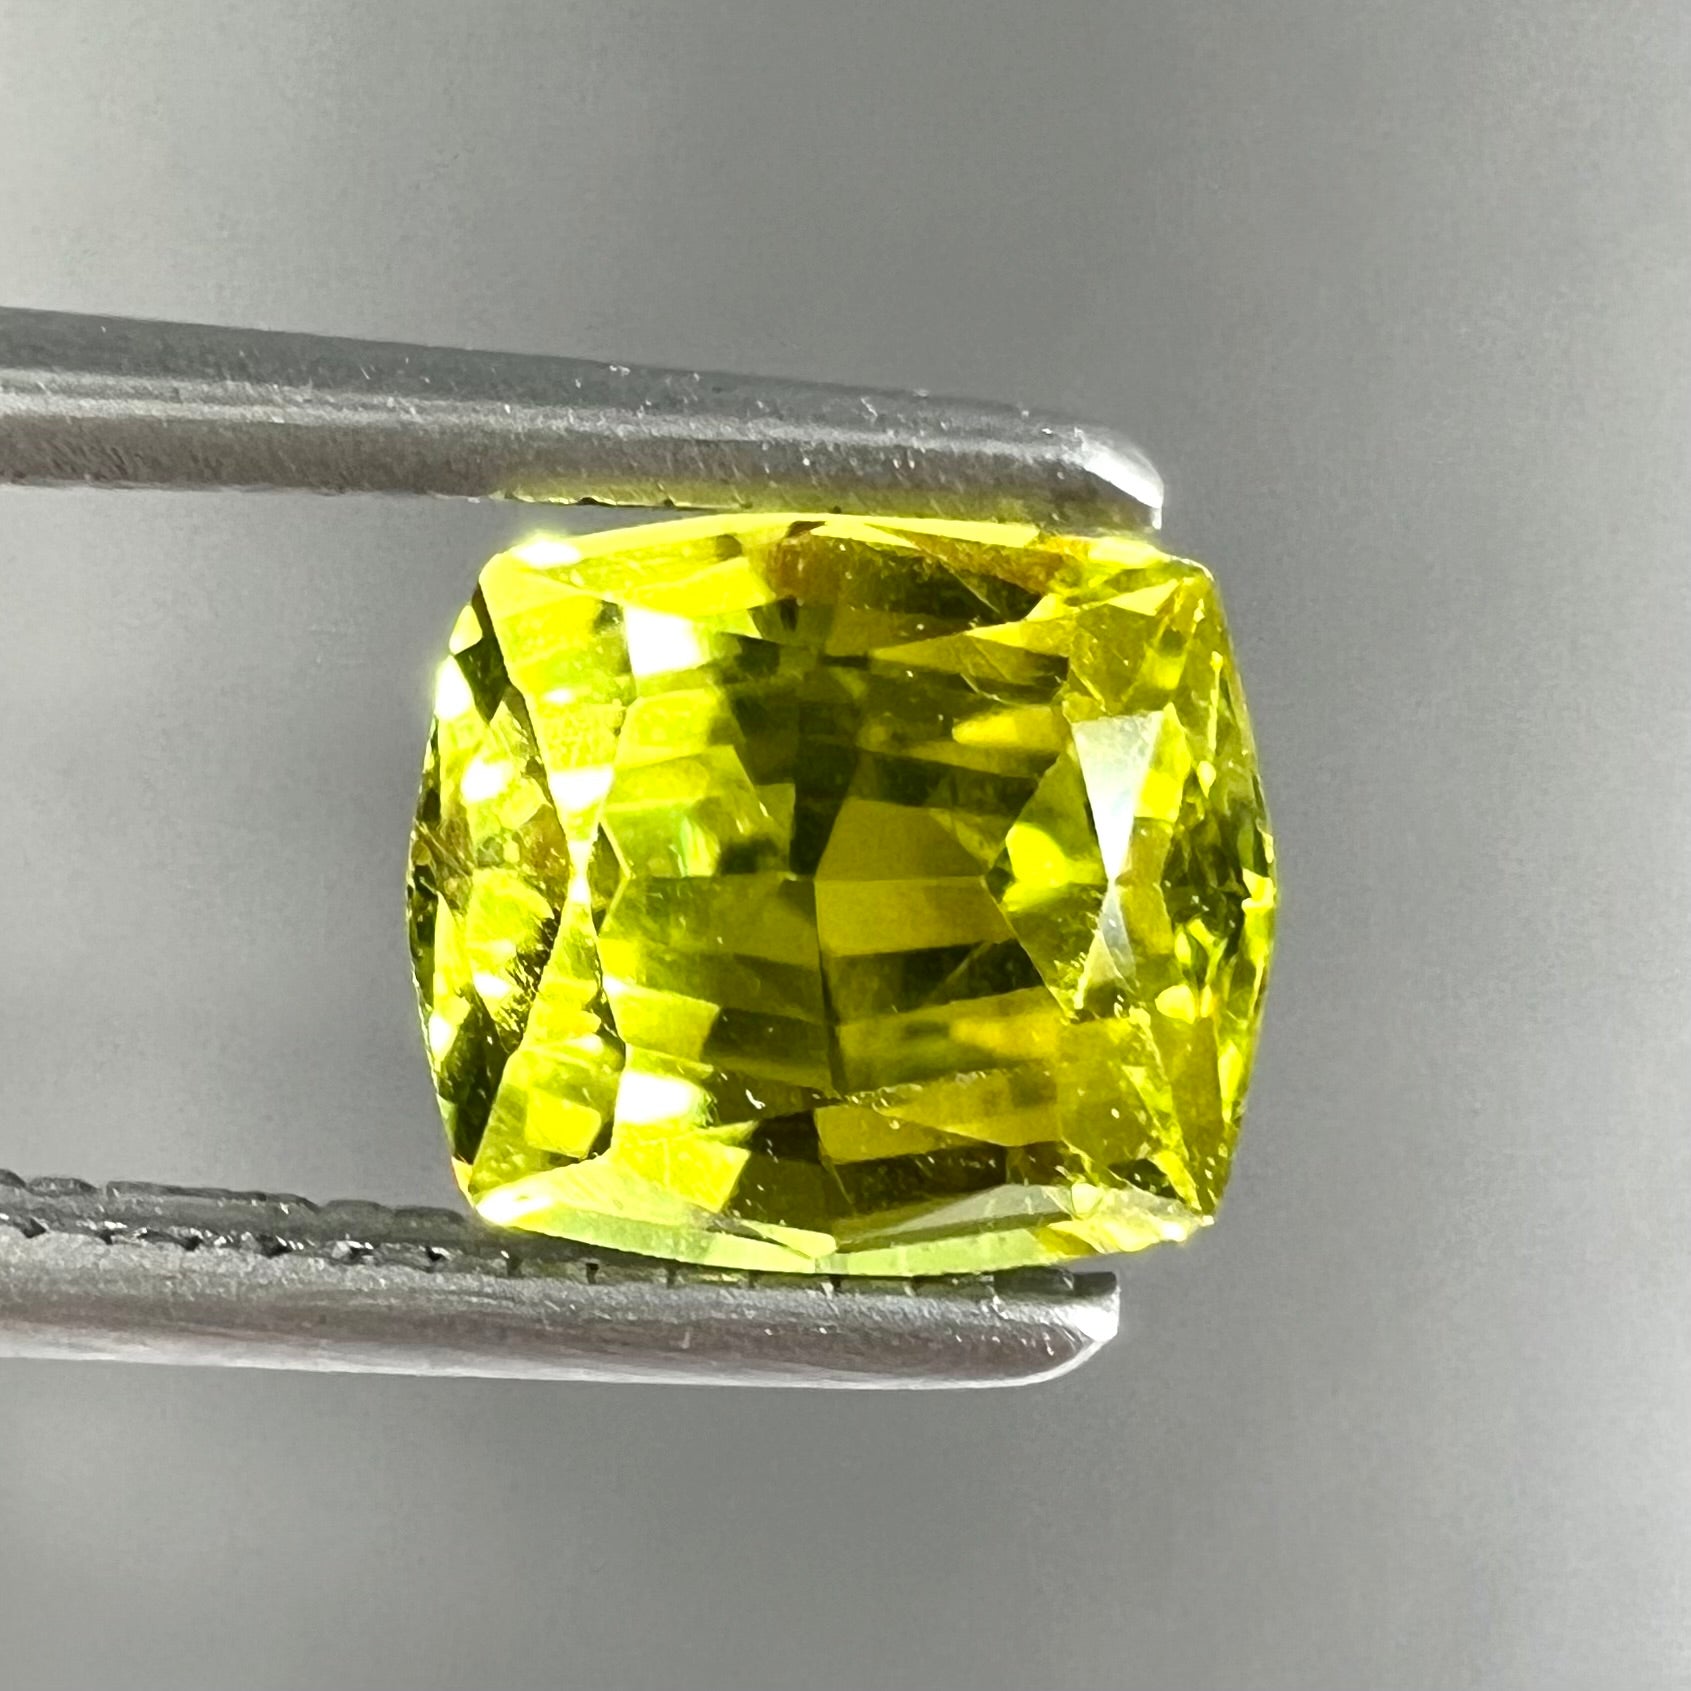 A loose, modified cushion cut greenish yellow chrysoberyl gemstone.